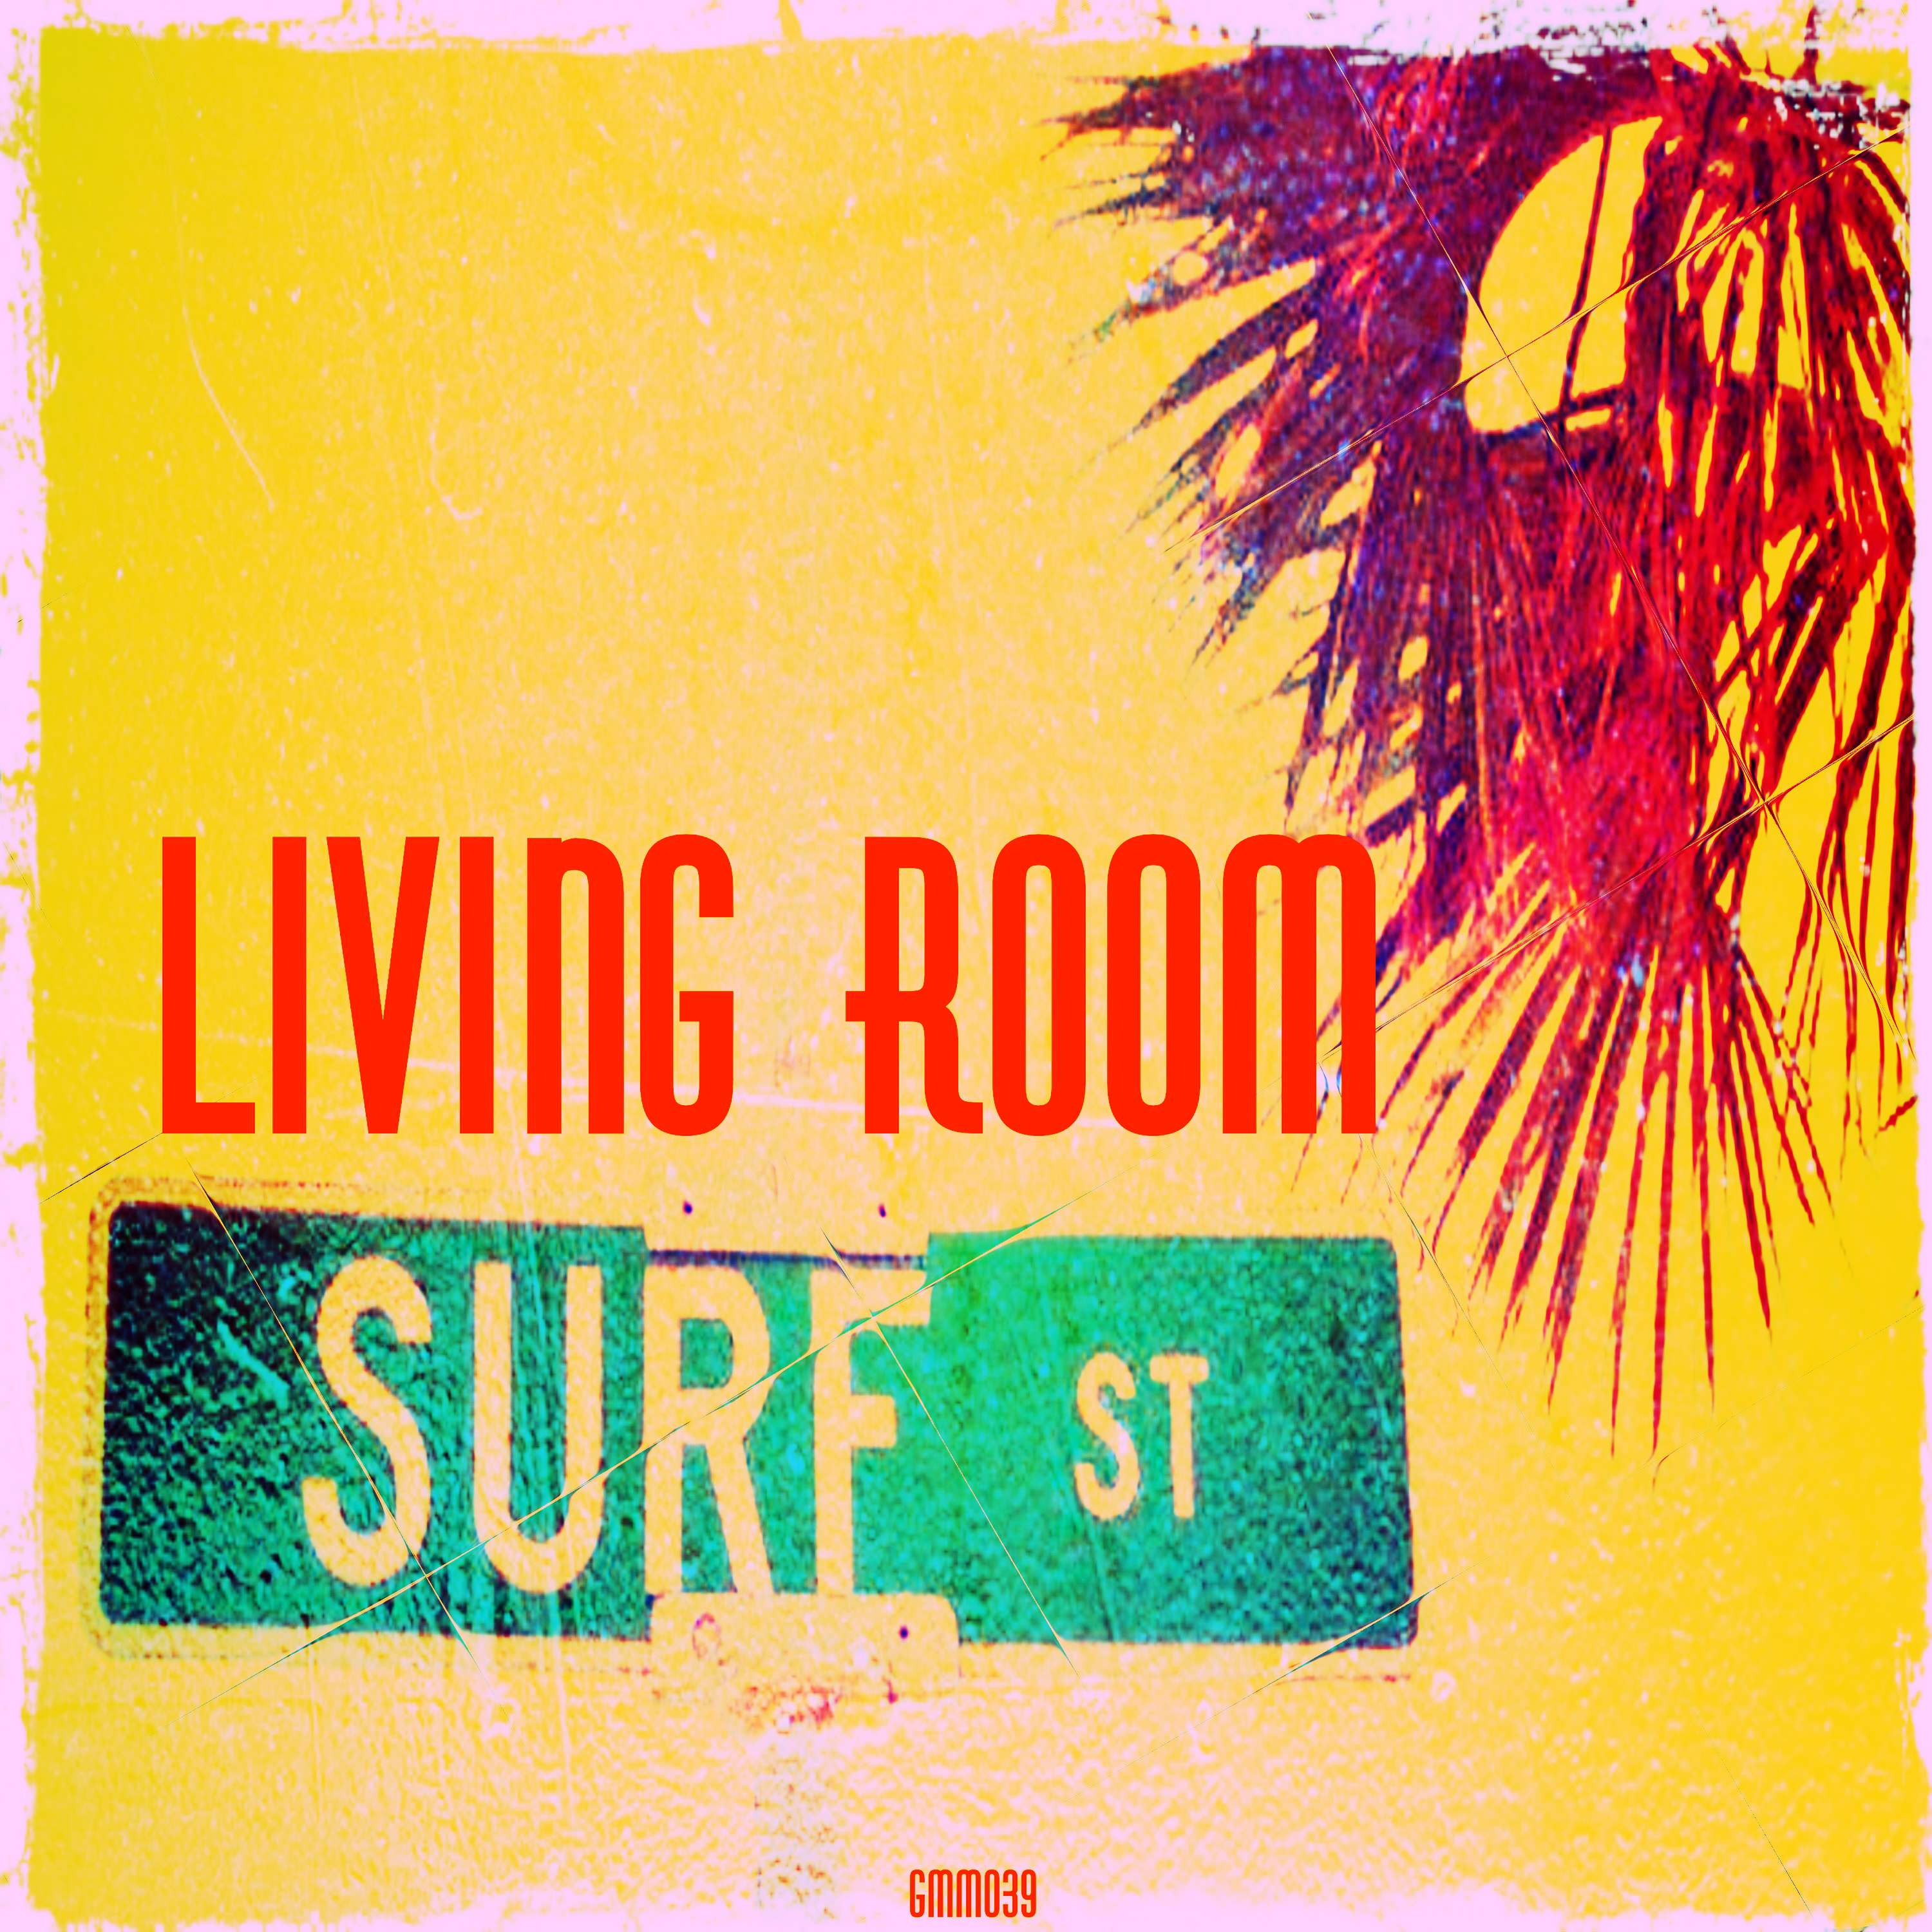 Maui Pie (Living Room Surf St Mix)